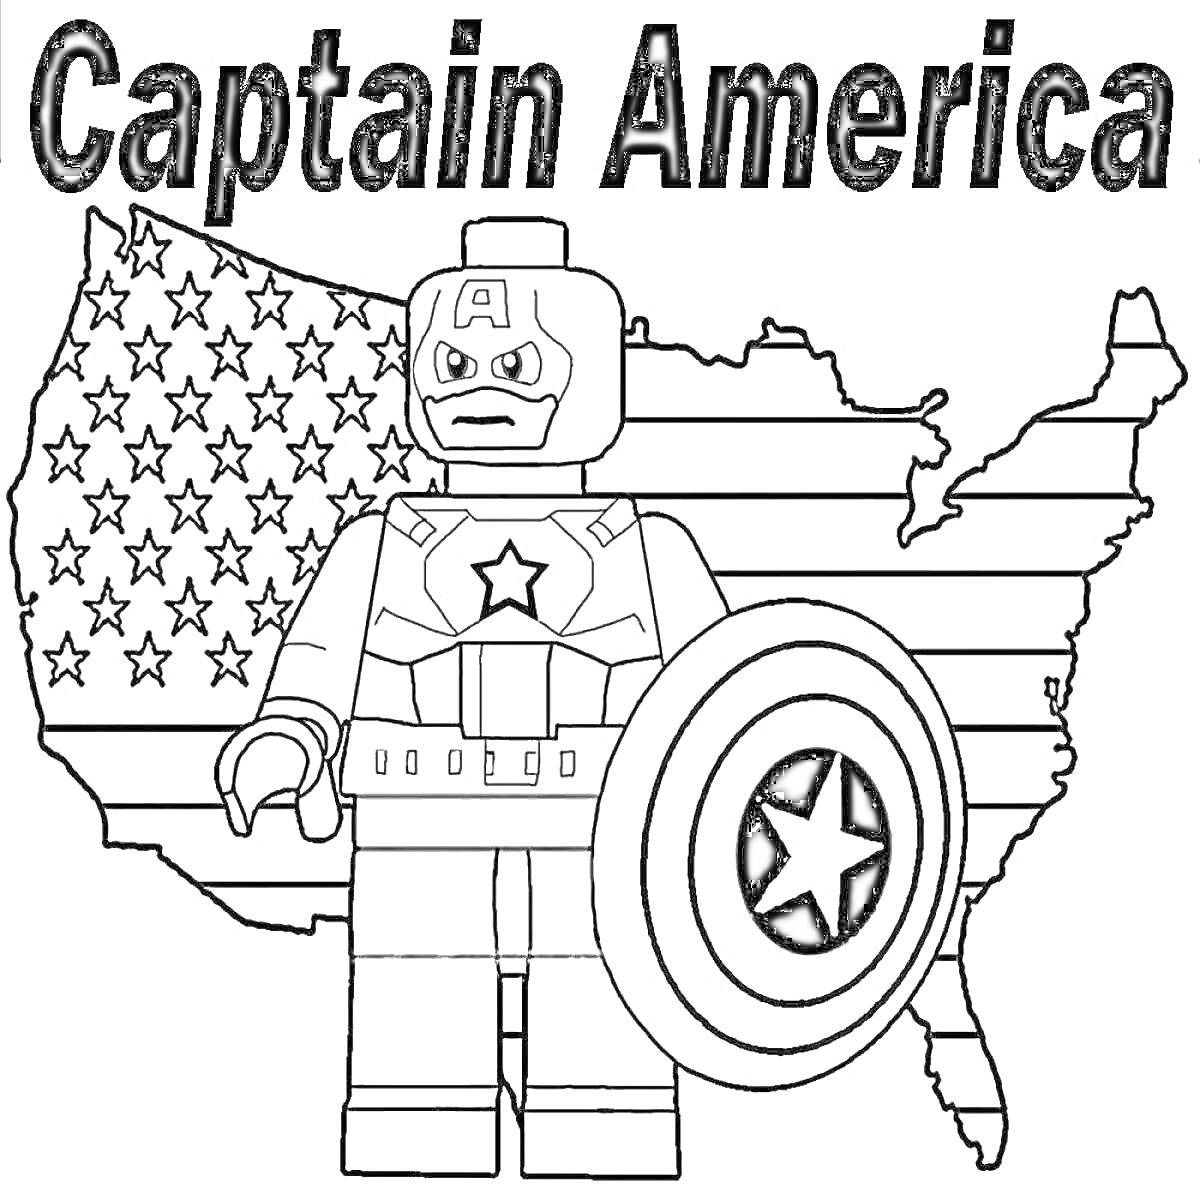 Капитан Америка в стиле Лего на фоне карты США с флагом